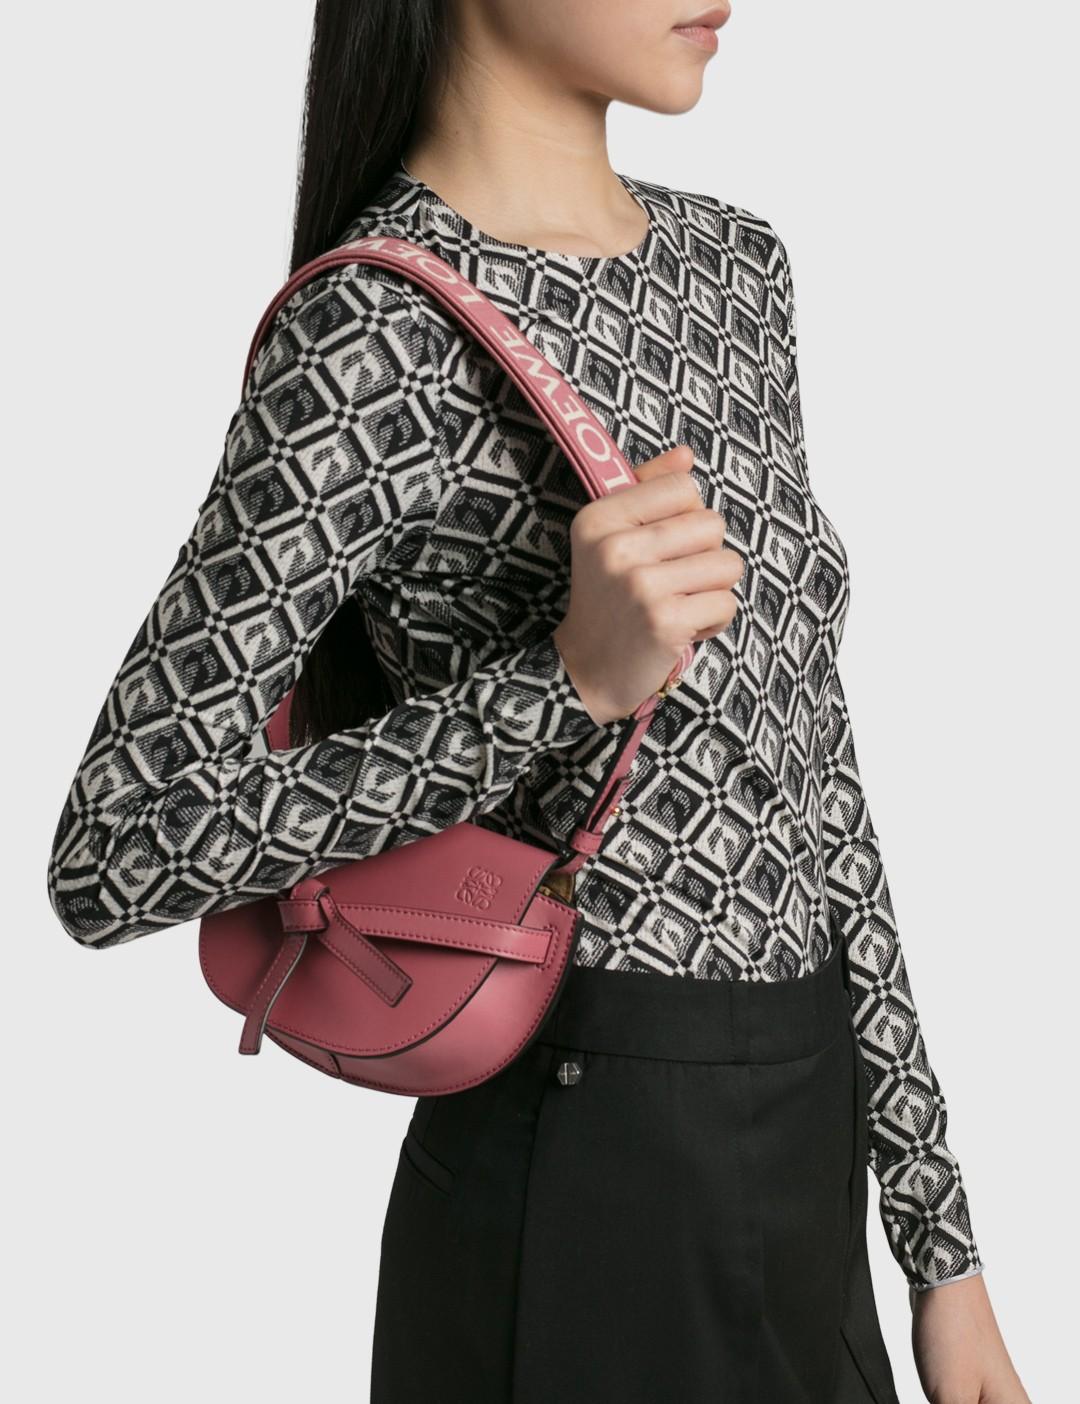 Gate Dual Mini Leather Shoulder Bag in Pink - Loewe